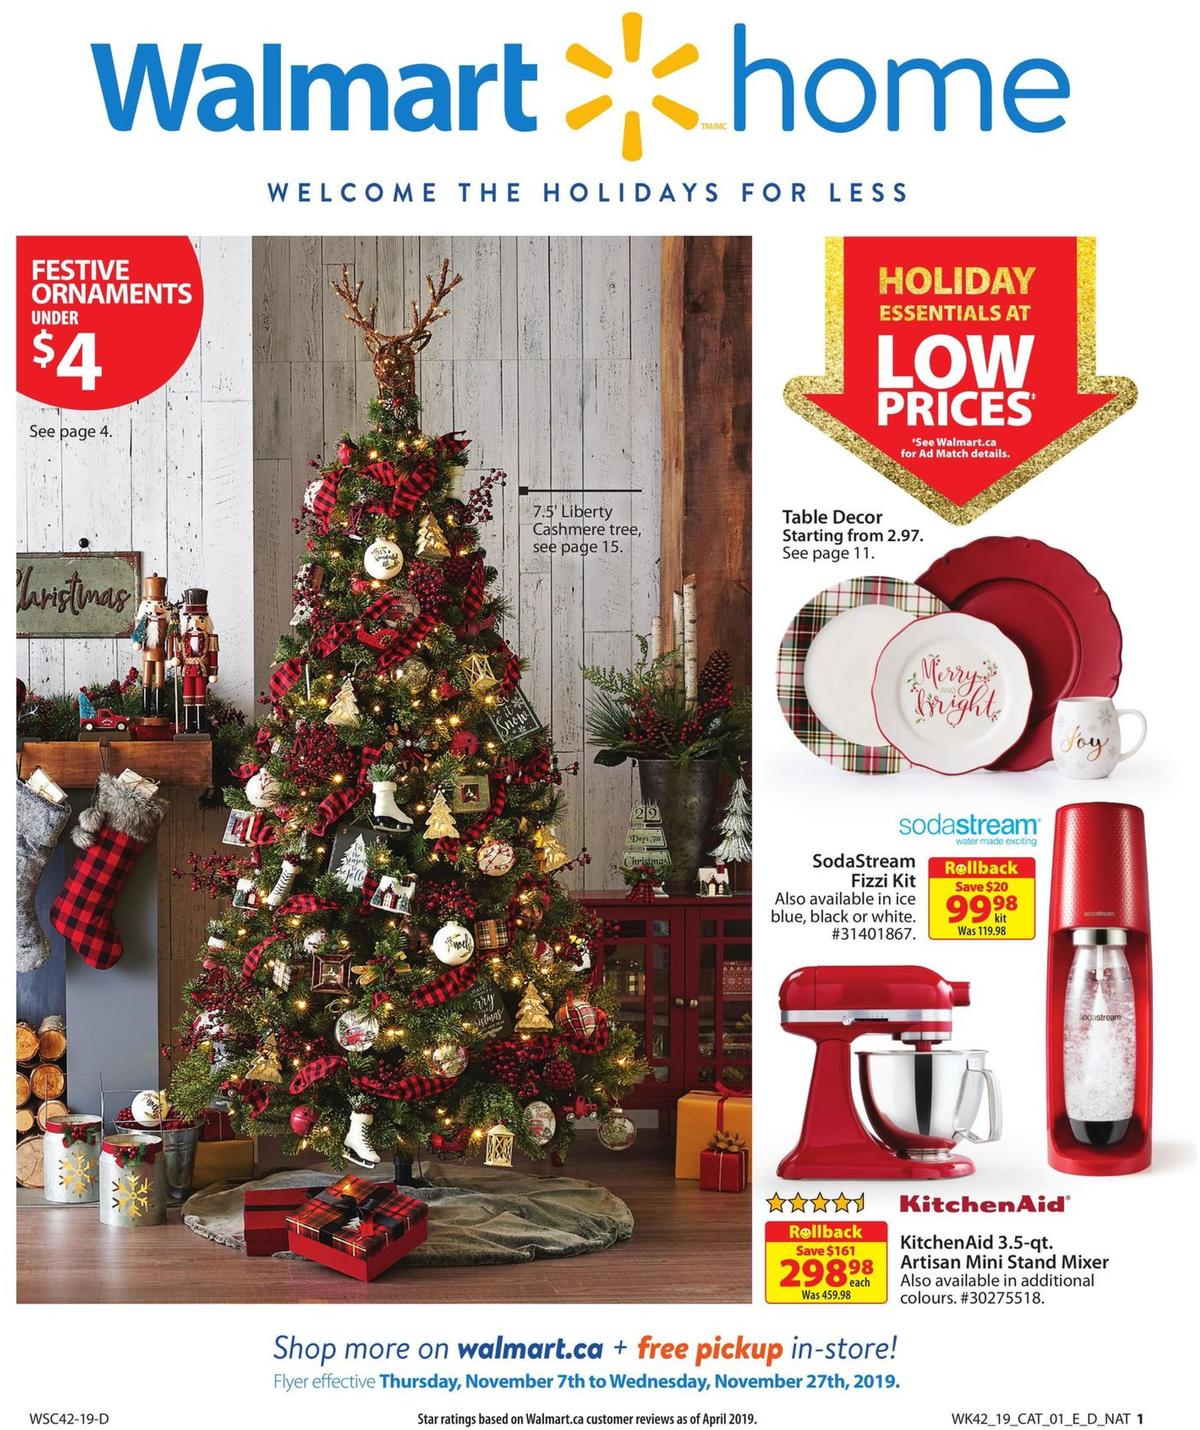 Walmart Walmart home Flyer from November 7